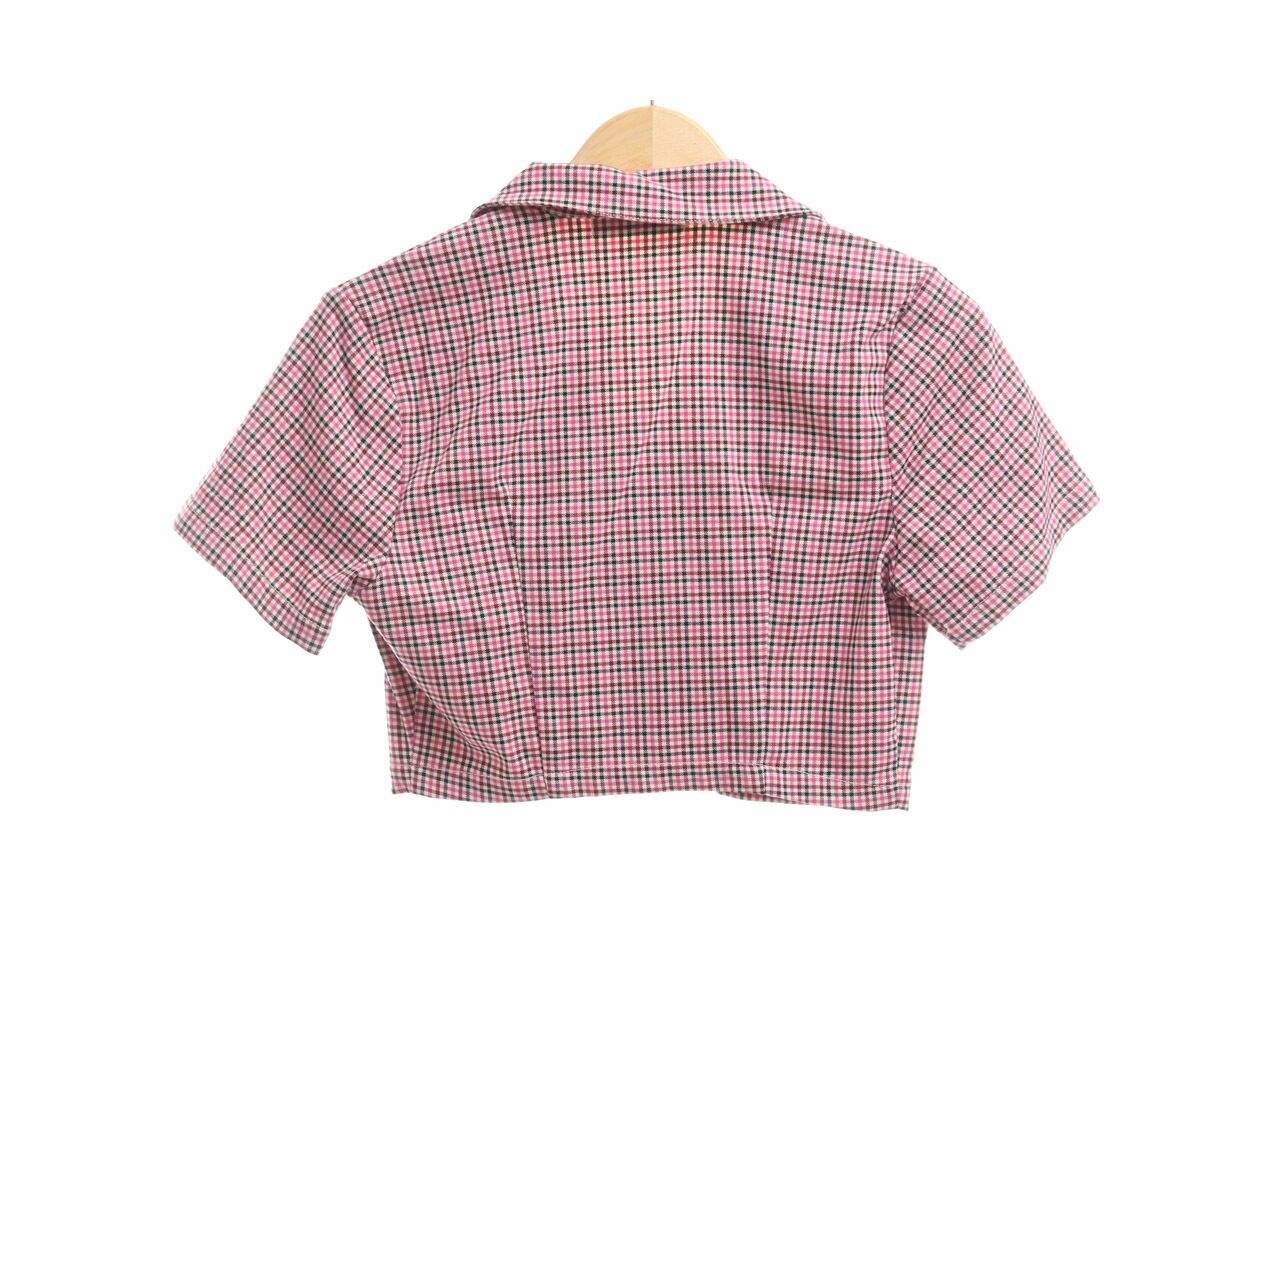 Brandy Melville Multi Crop Shirt